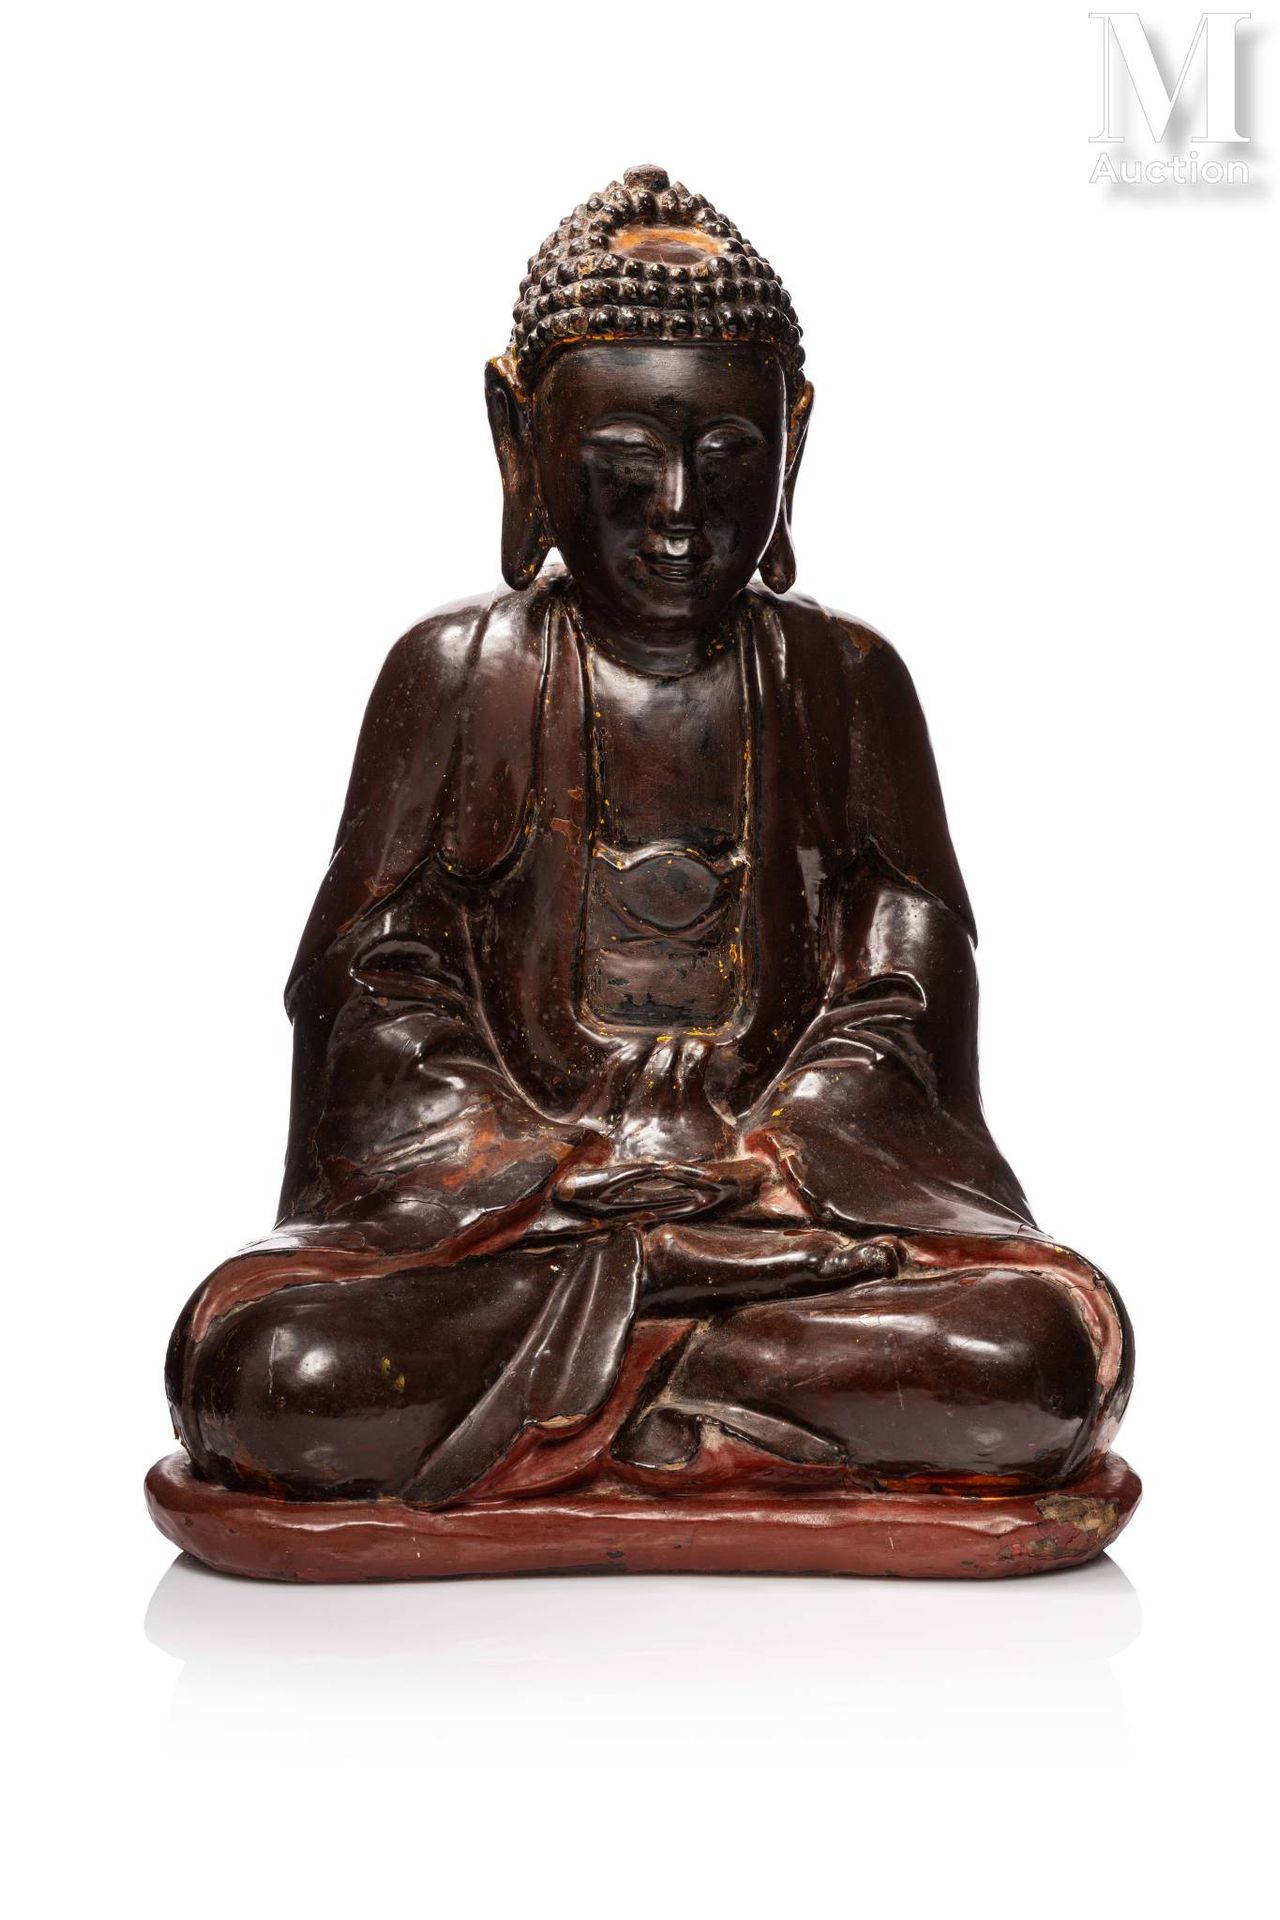 Ⓟ VIETNAM, XVIIIe/XIXe siècle Skulptur aus lackiertem Holz
Stellt einen Bodhisat&hellip;